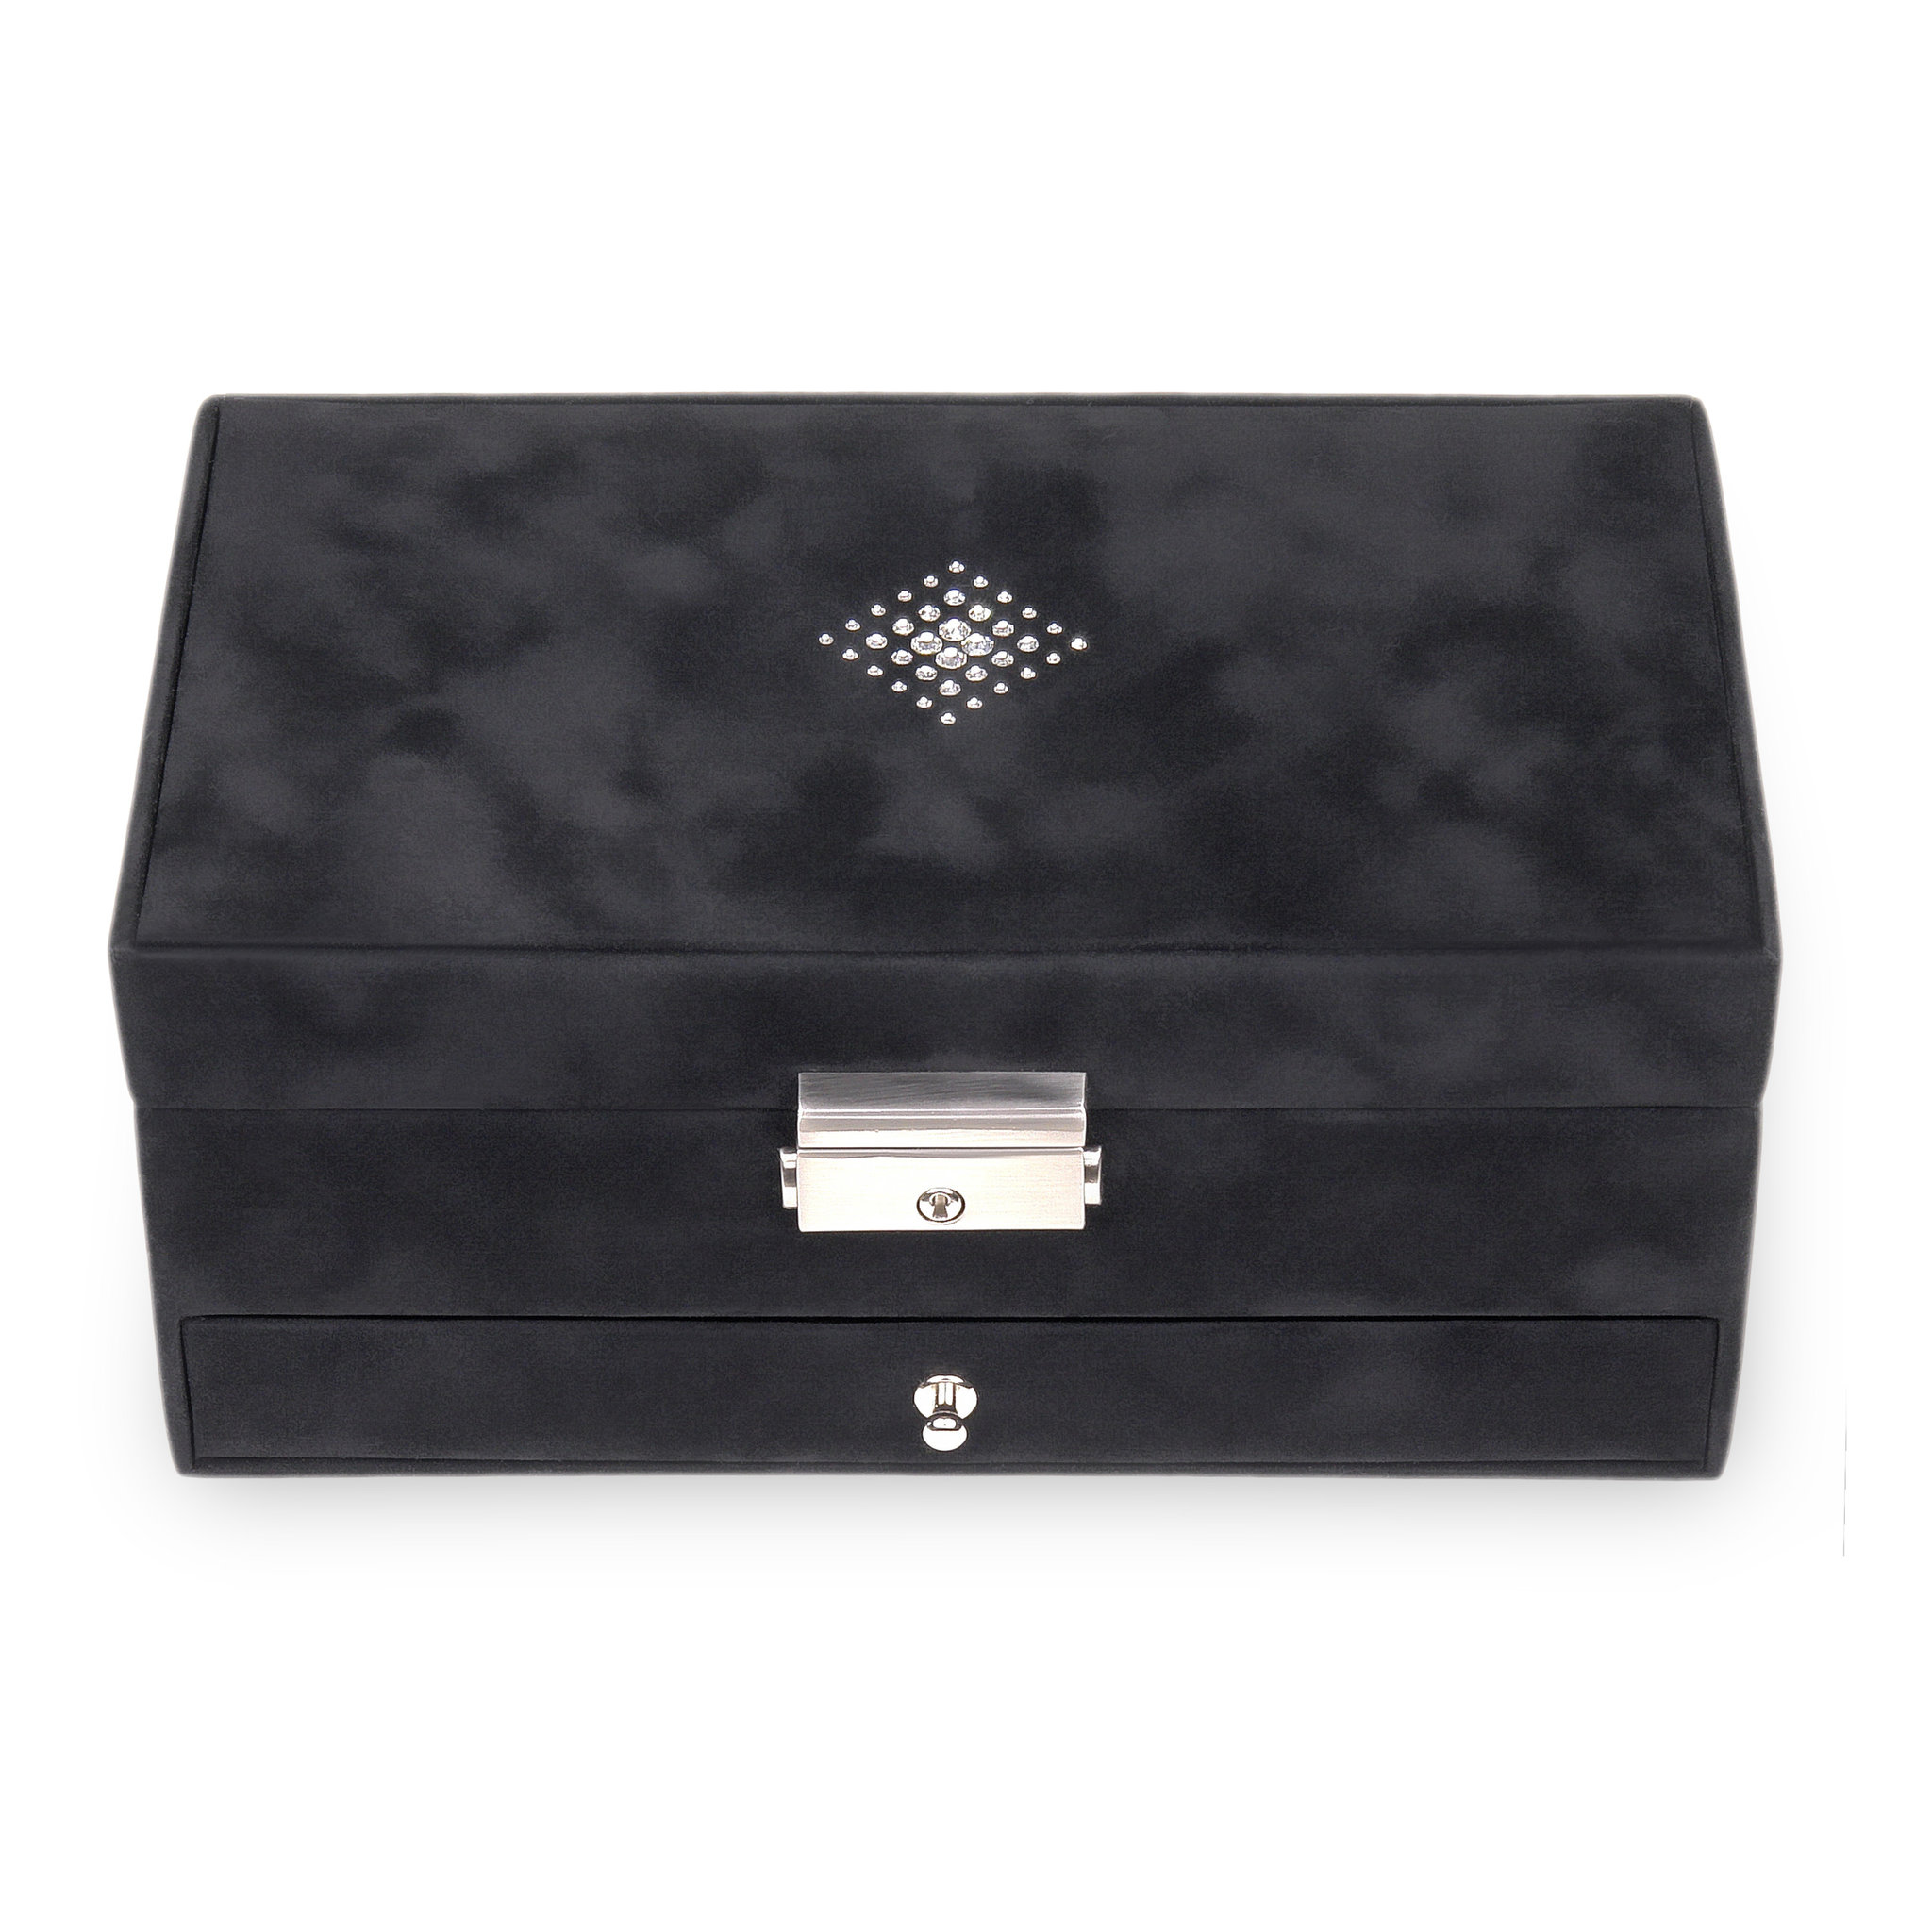 Hanna crystalo / black jewellery box